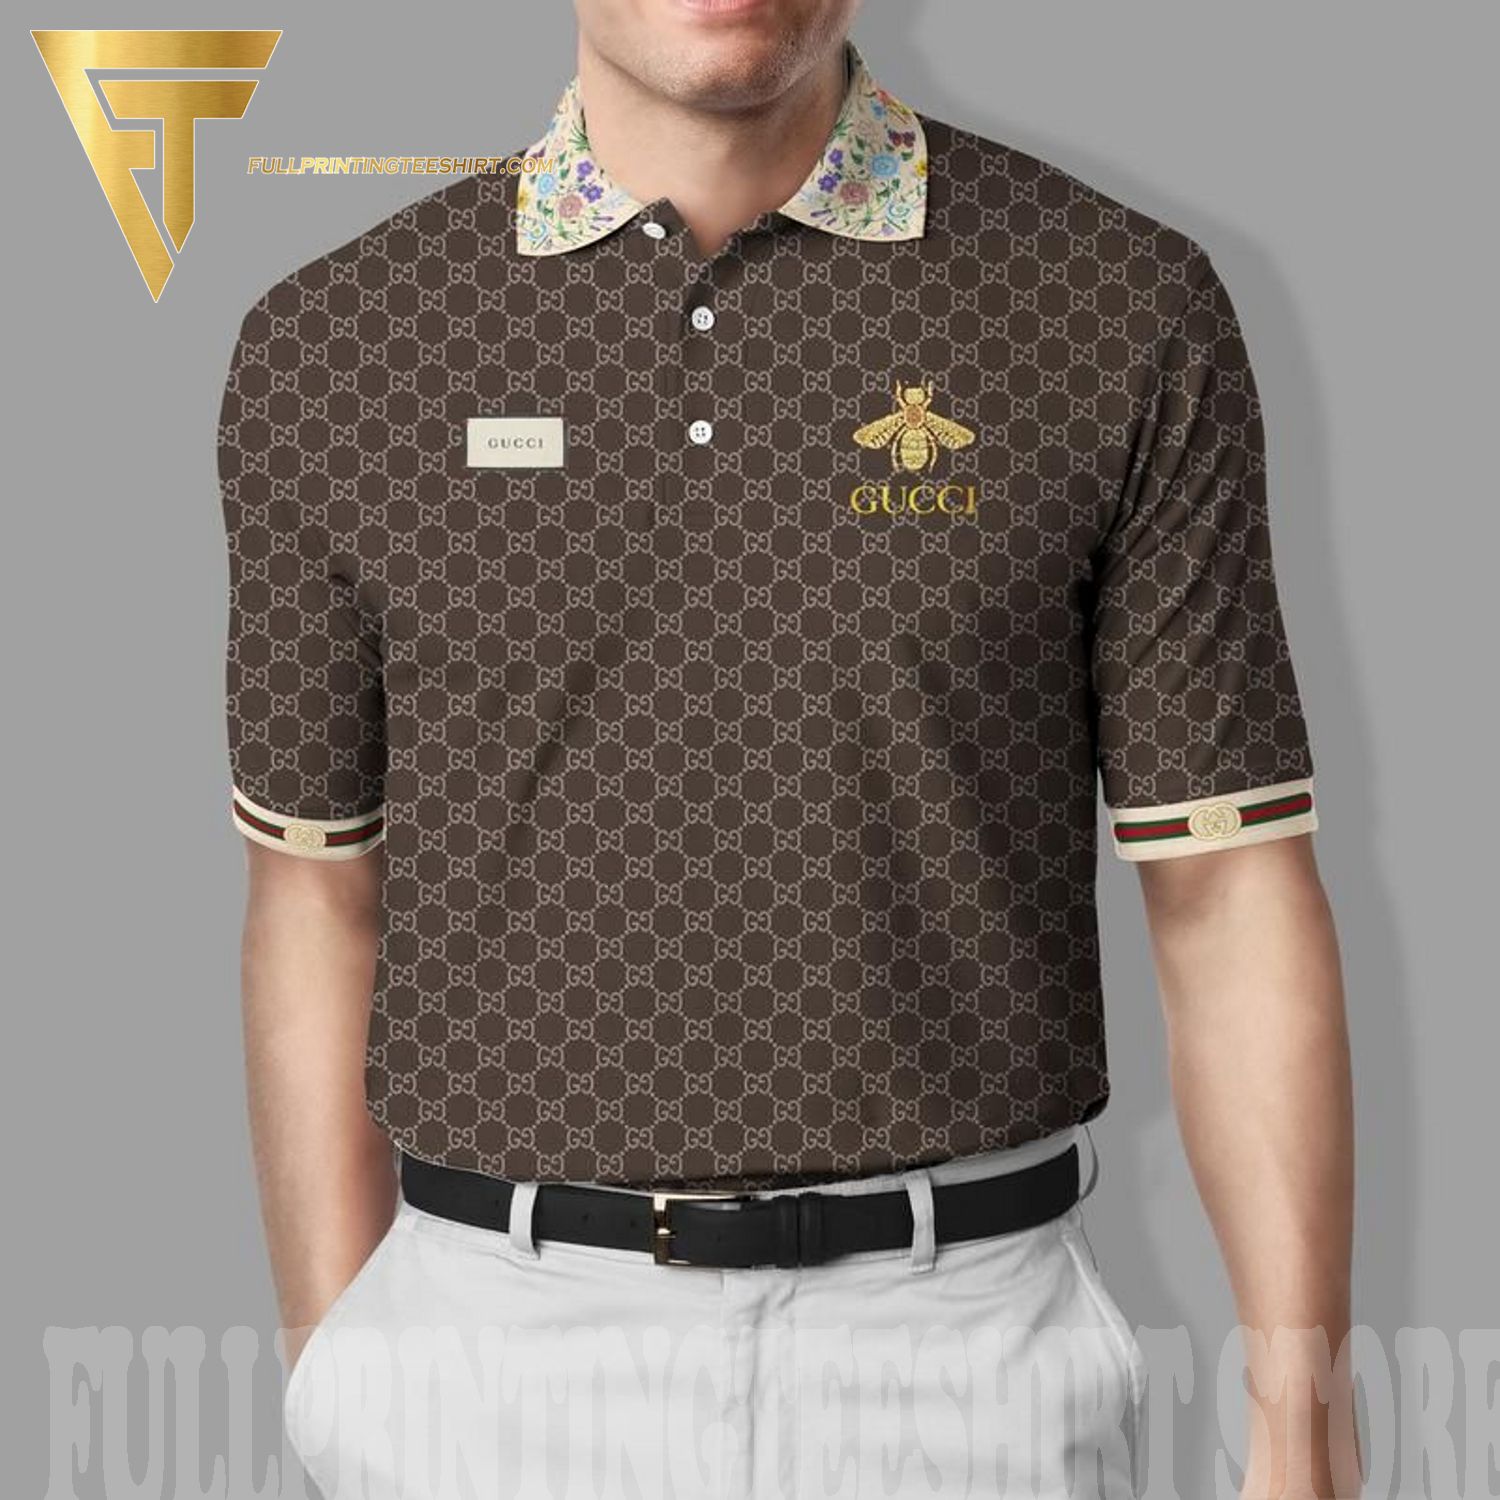 NEW] Gucci Mickey Mouse Baseball Jersey Shirt Luxury Outfit